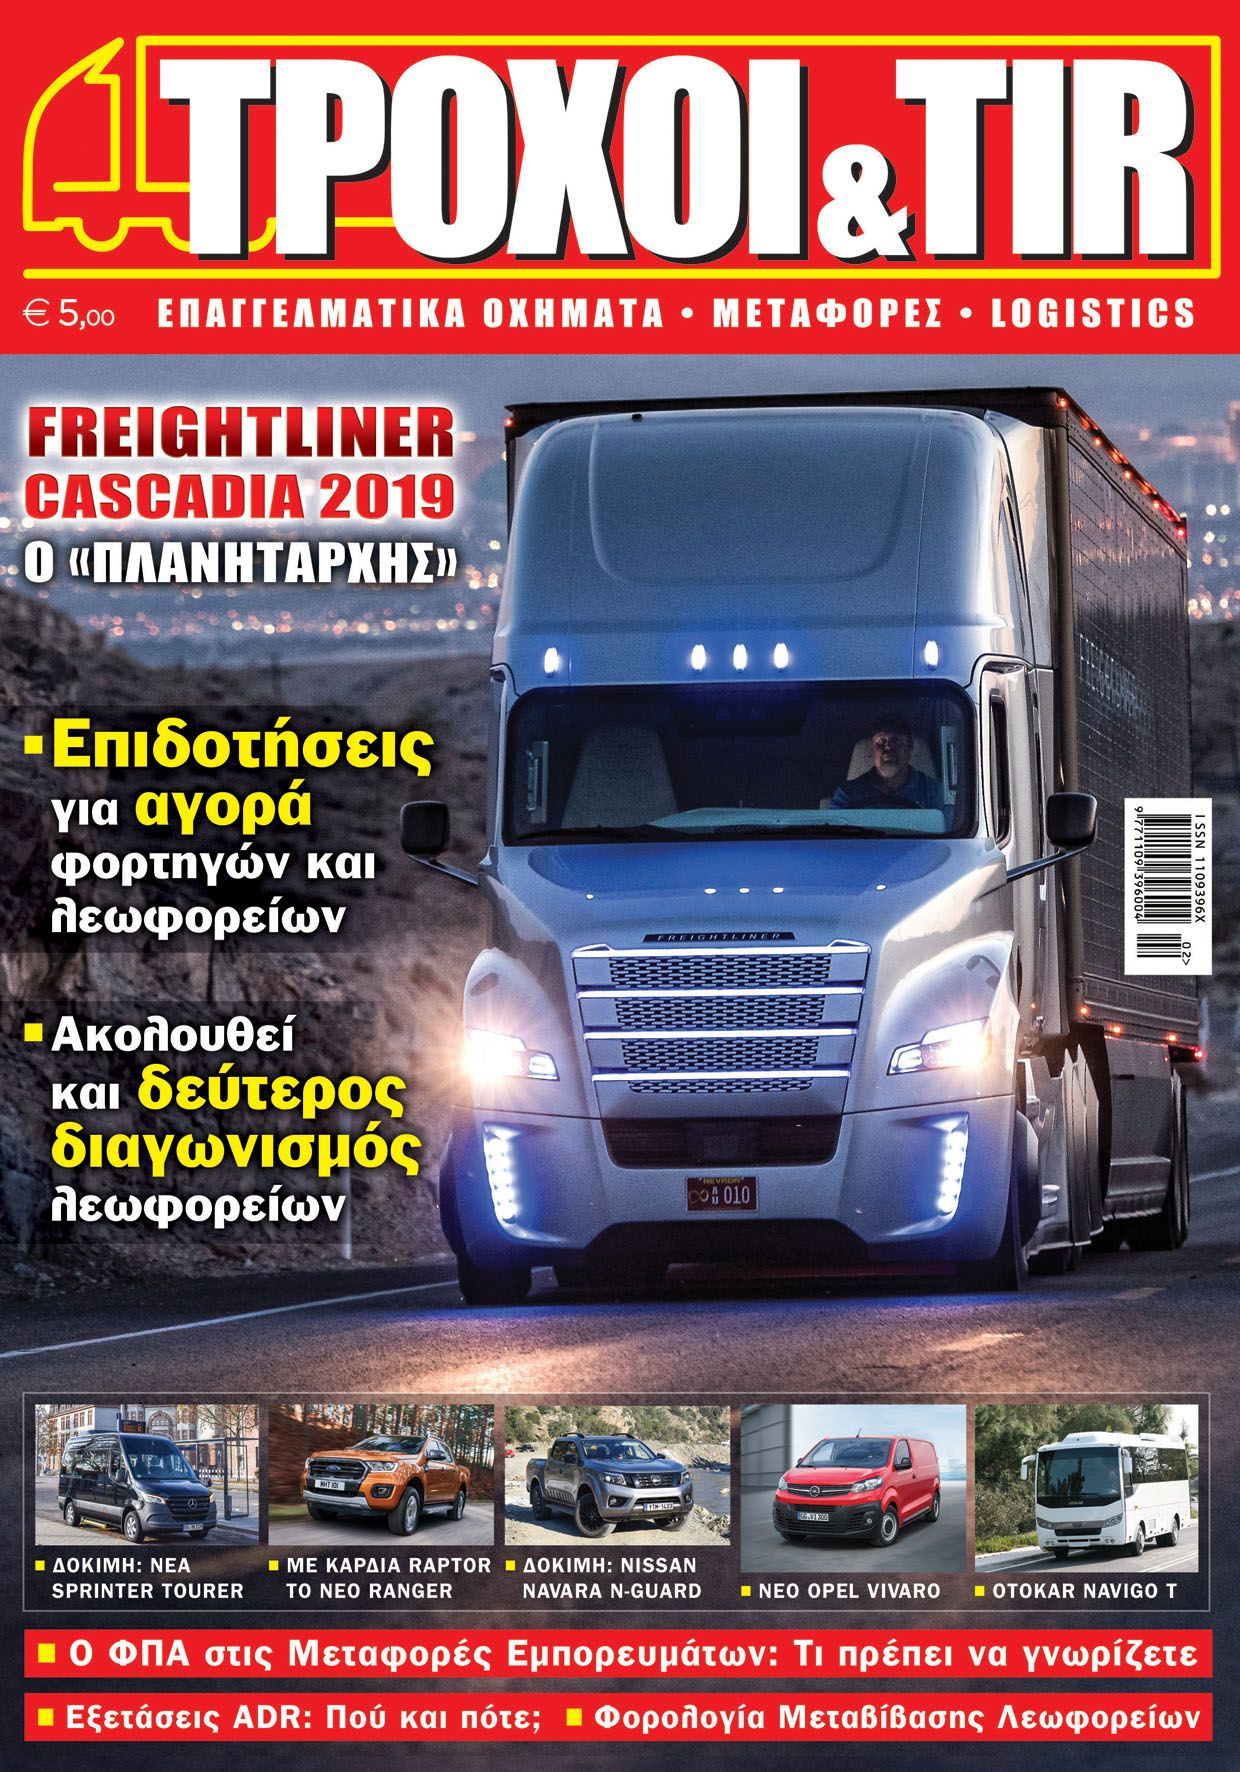 Troxoikaitir issue 370 february 2019 cover